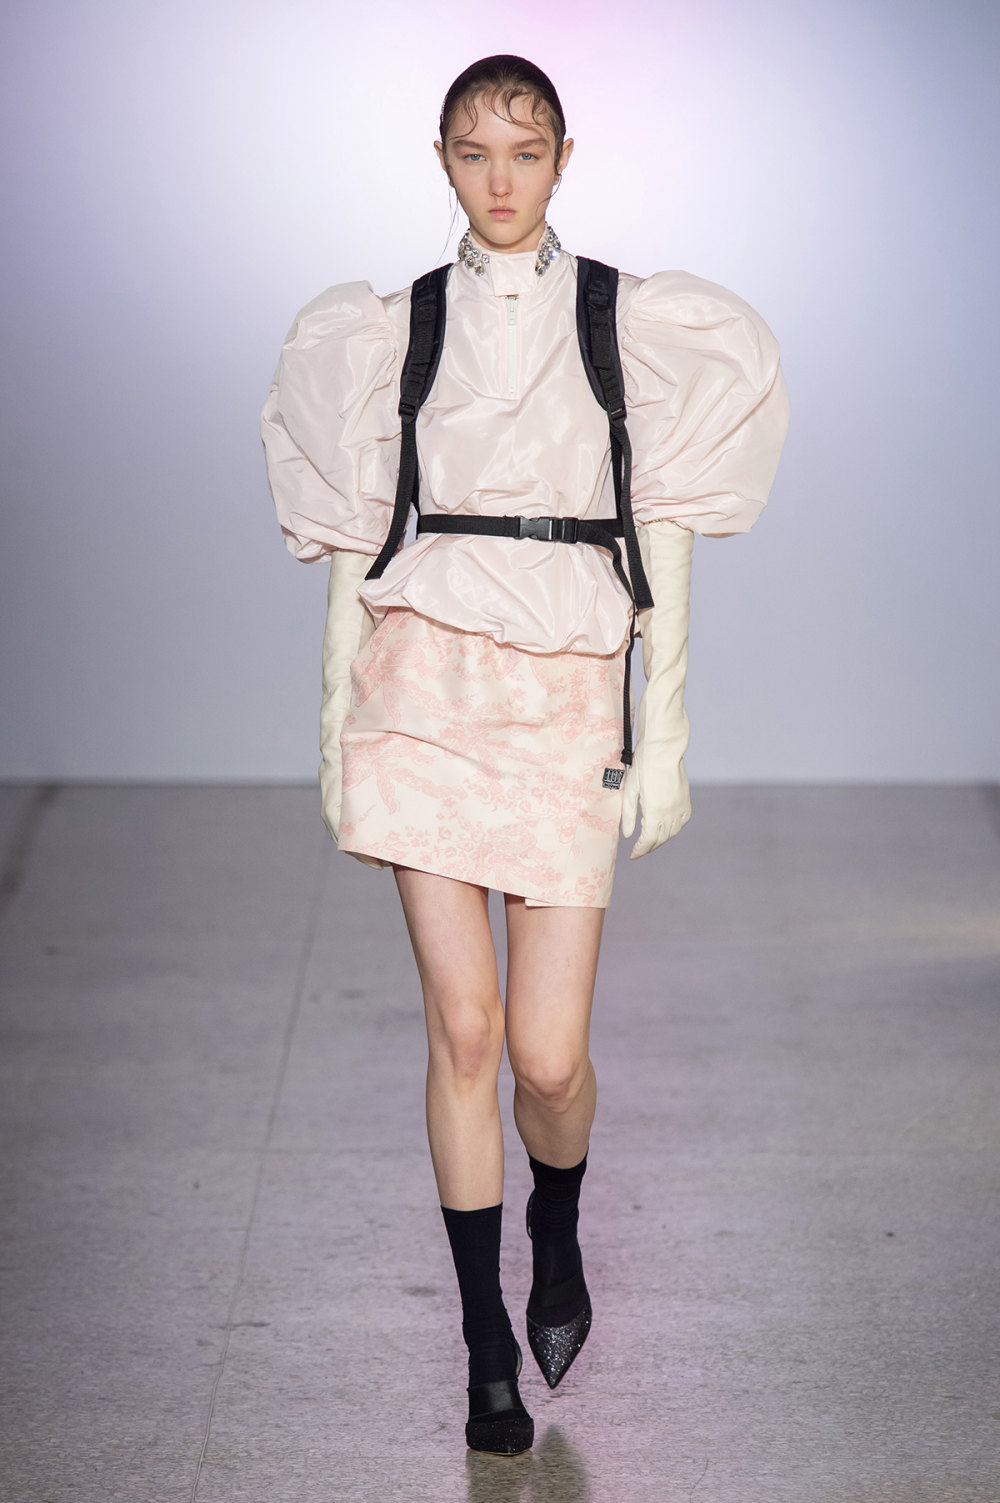 Brognano时装系列都是粉红色除了一件泡沫薄荷绿薄纱连衣裙-20.jpg